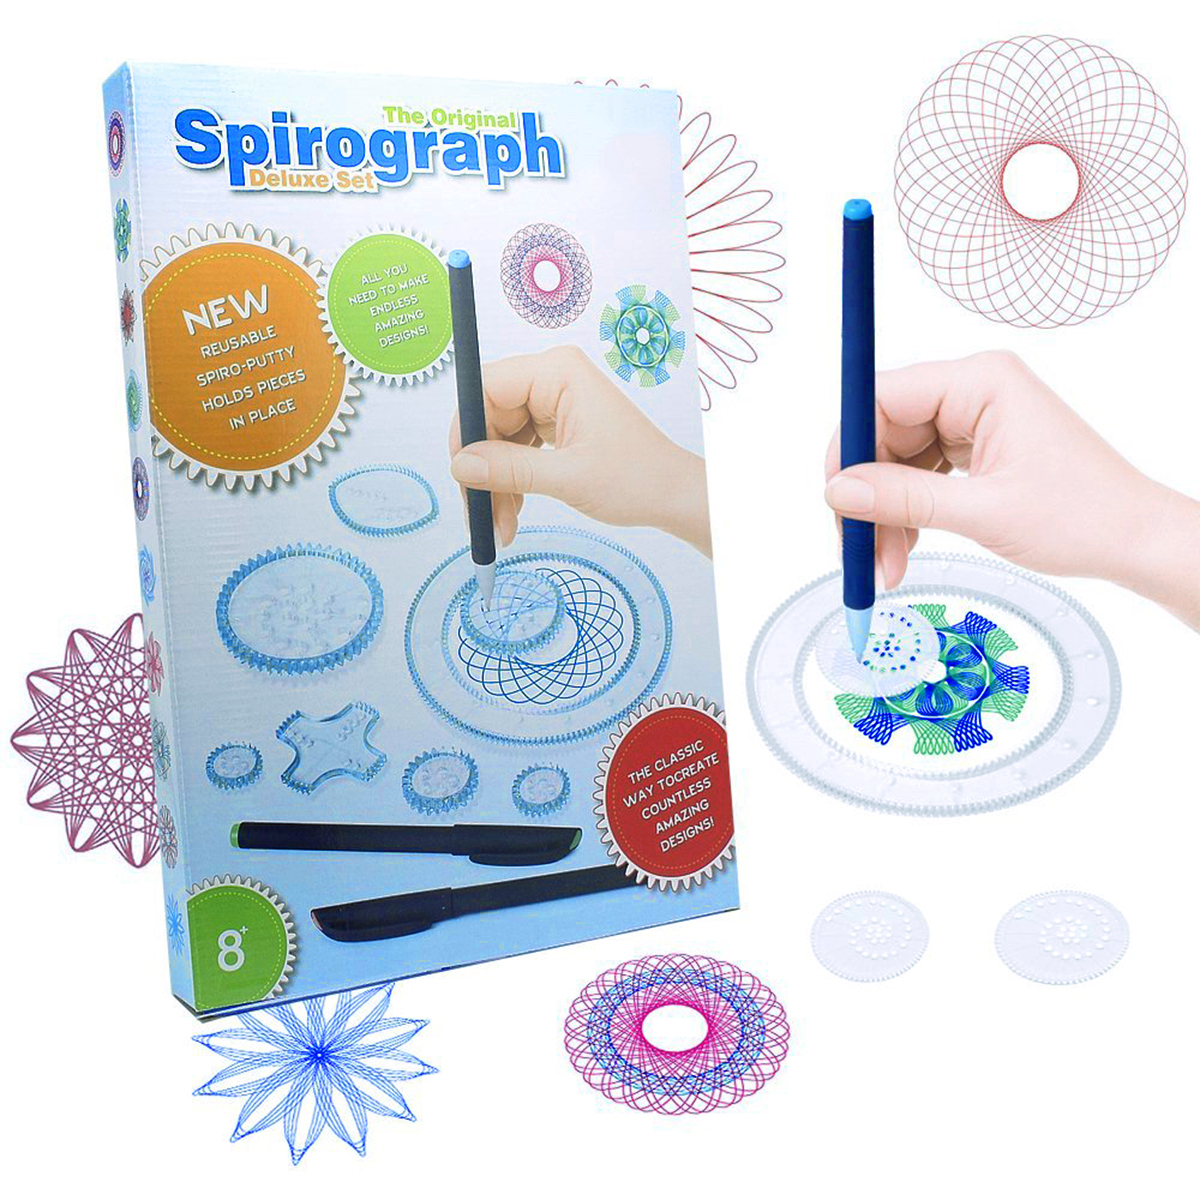 Original Spirograph Design Set Geometric Drawing Ruler Kids Spiral Art Craft Creation Education Toy 110